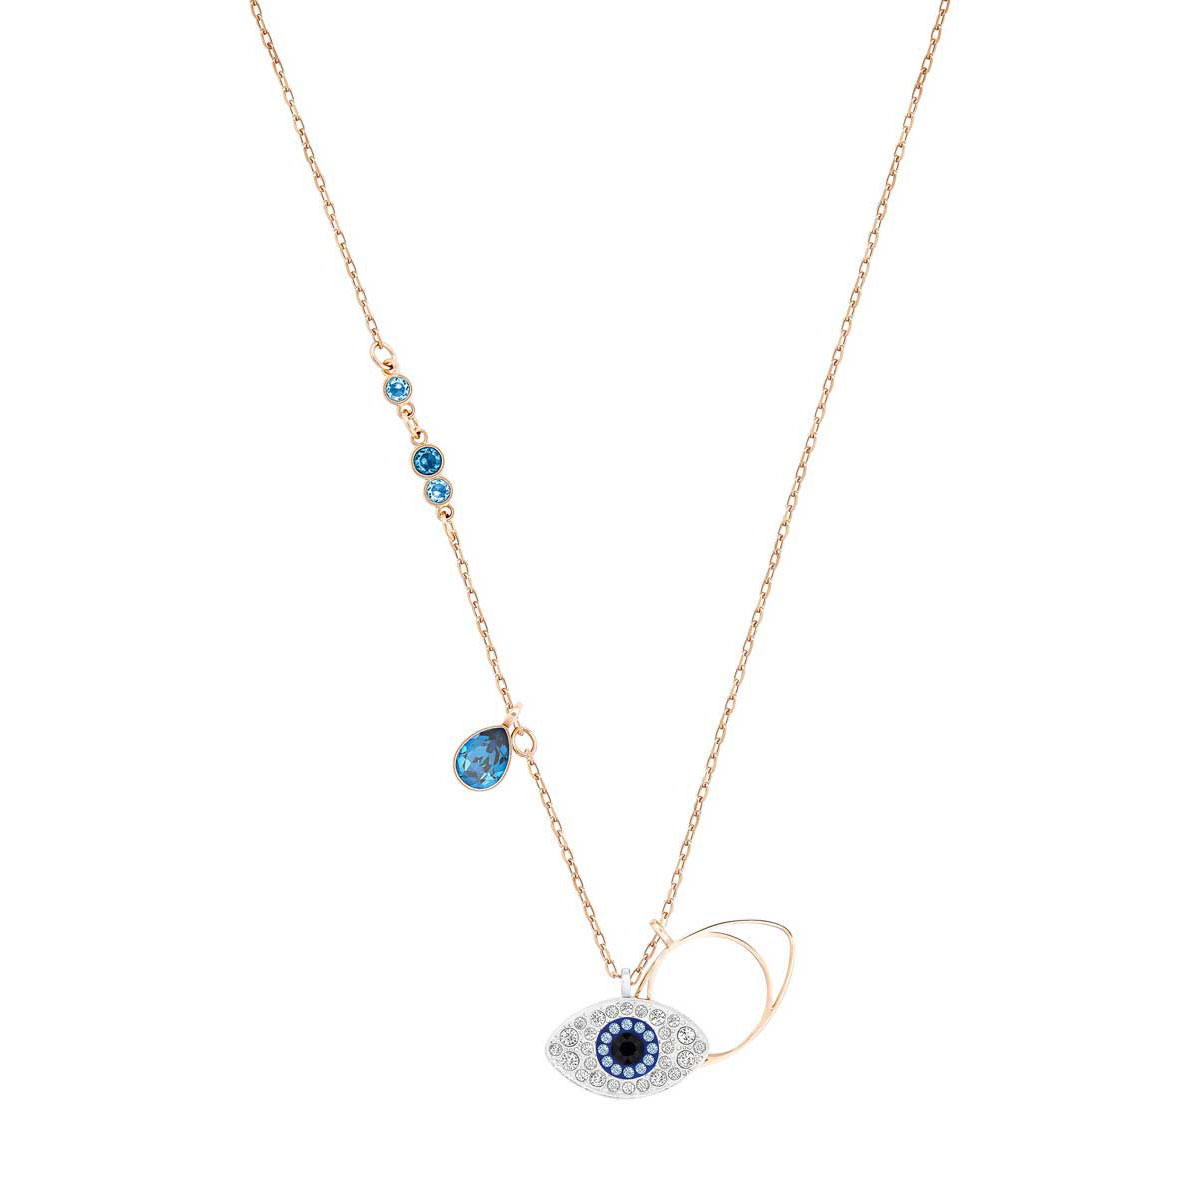 Swarovski Symbolic Evil Eye Pendant Necklace, Blue